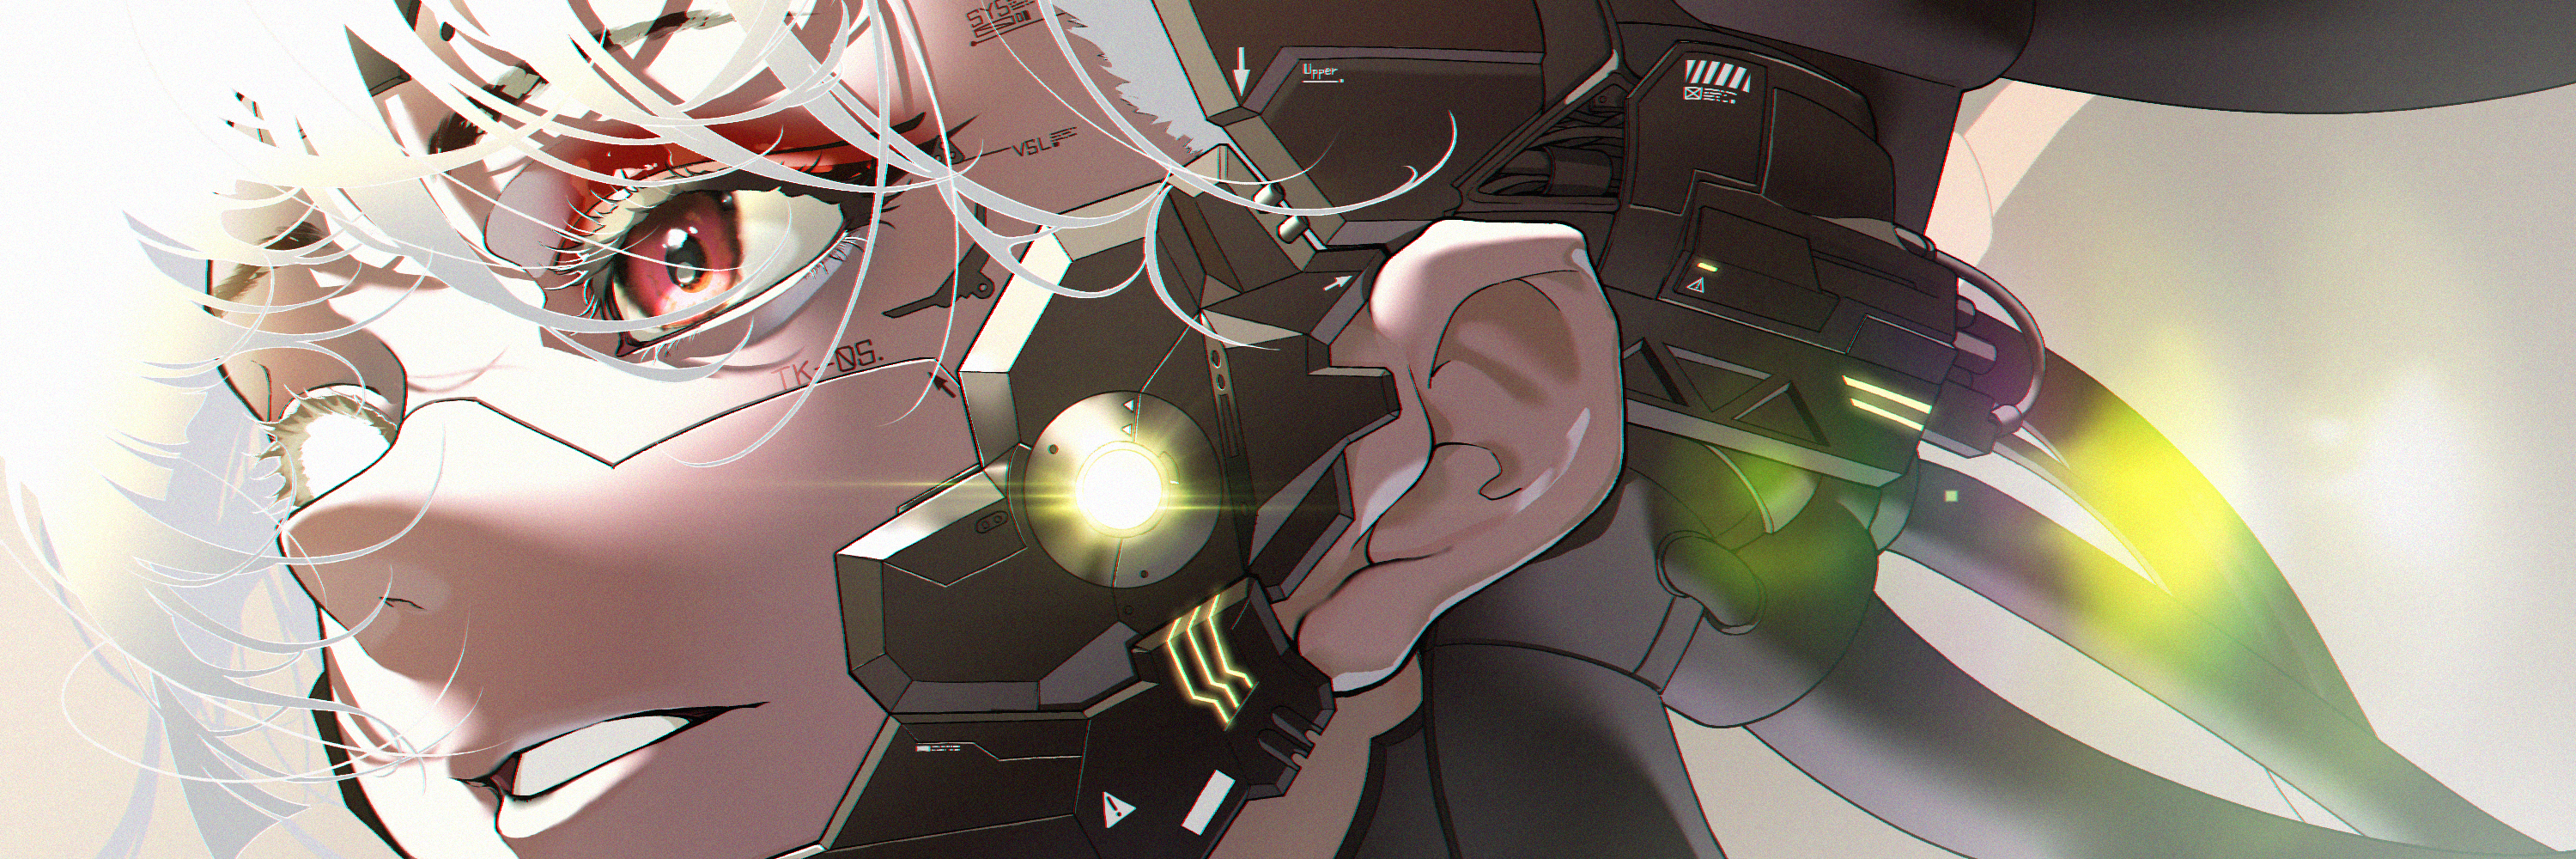 Image Full Metal Alchemist Cyborg Anime 1600x1200